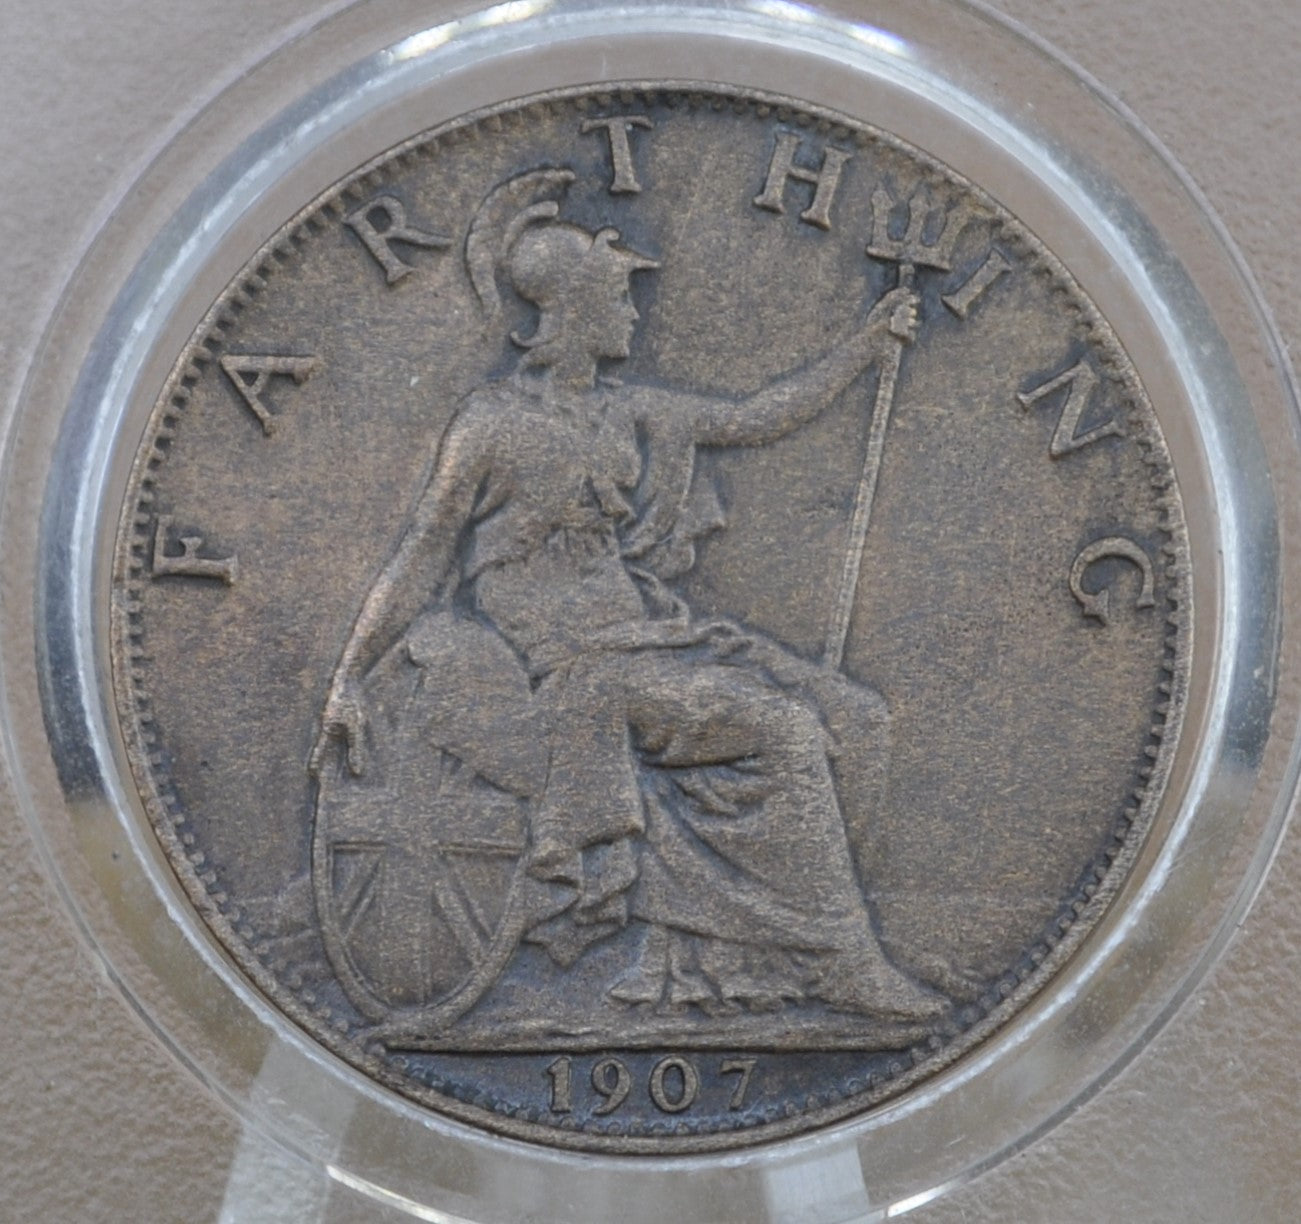 1900-1910 Farthing Great Britain - UK Farthing Choose by Date - One Quarter Penny British Farthing - Bronze